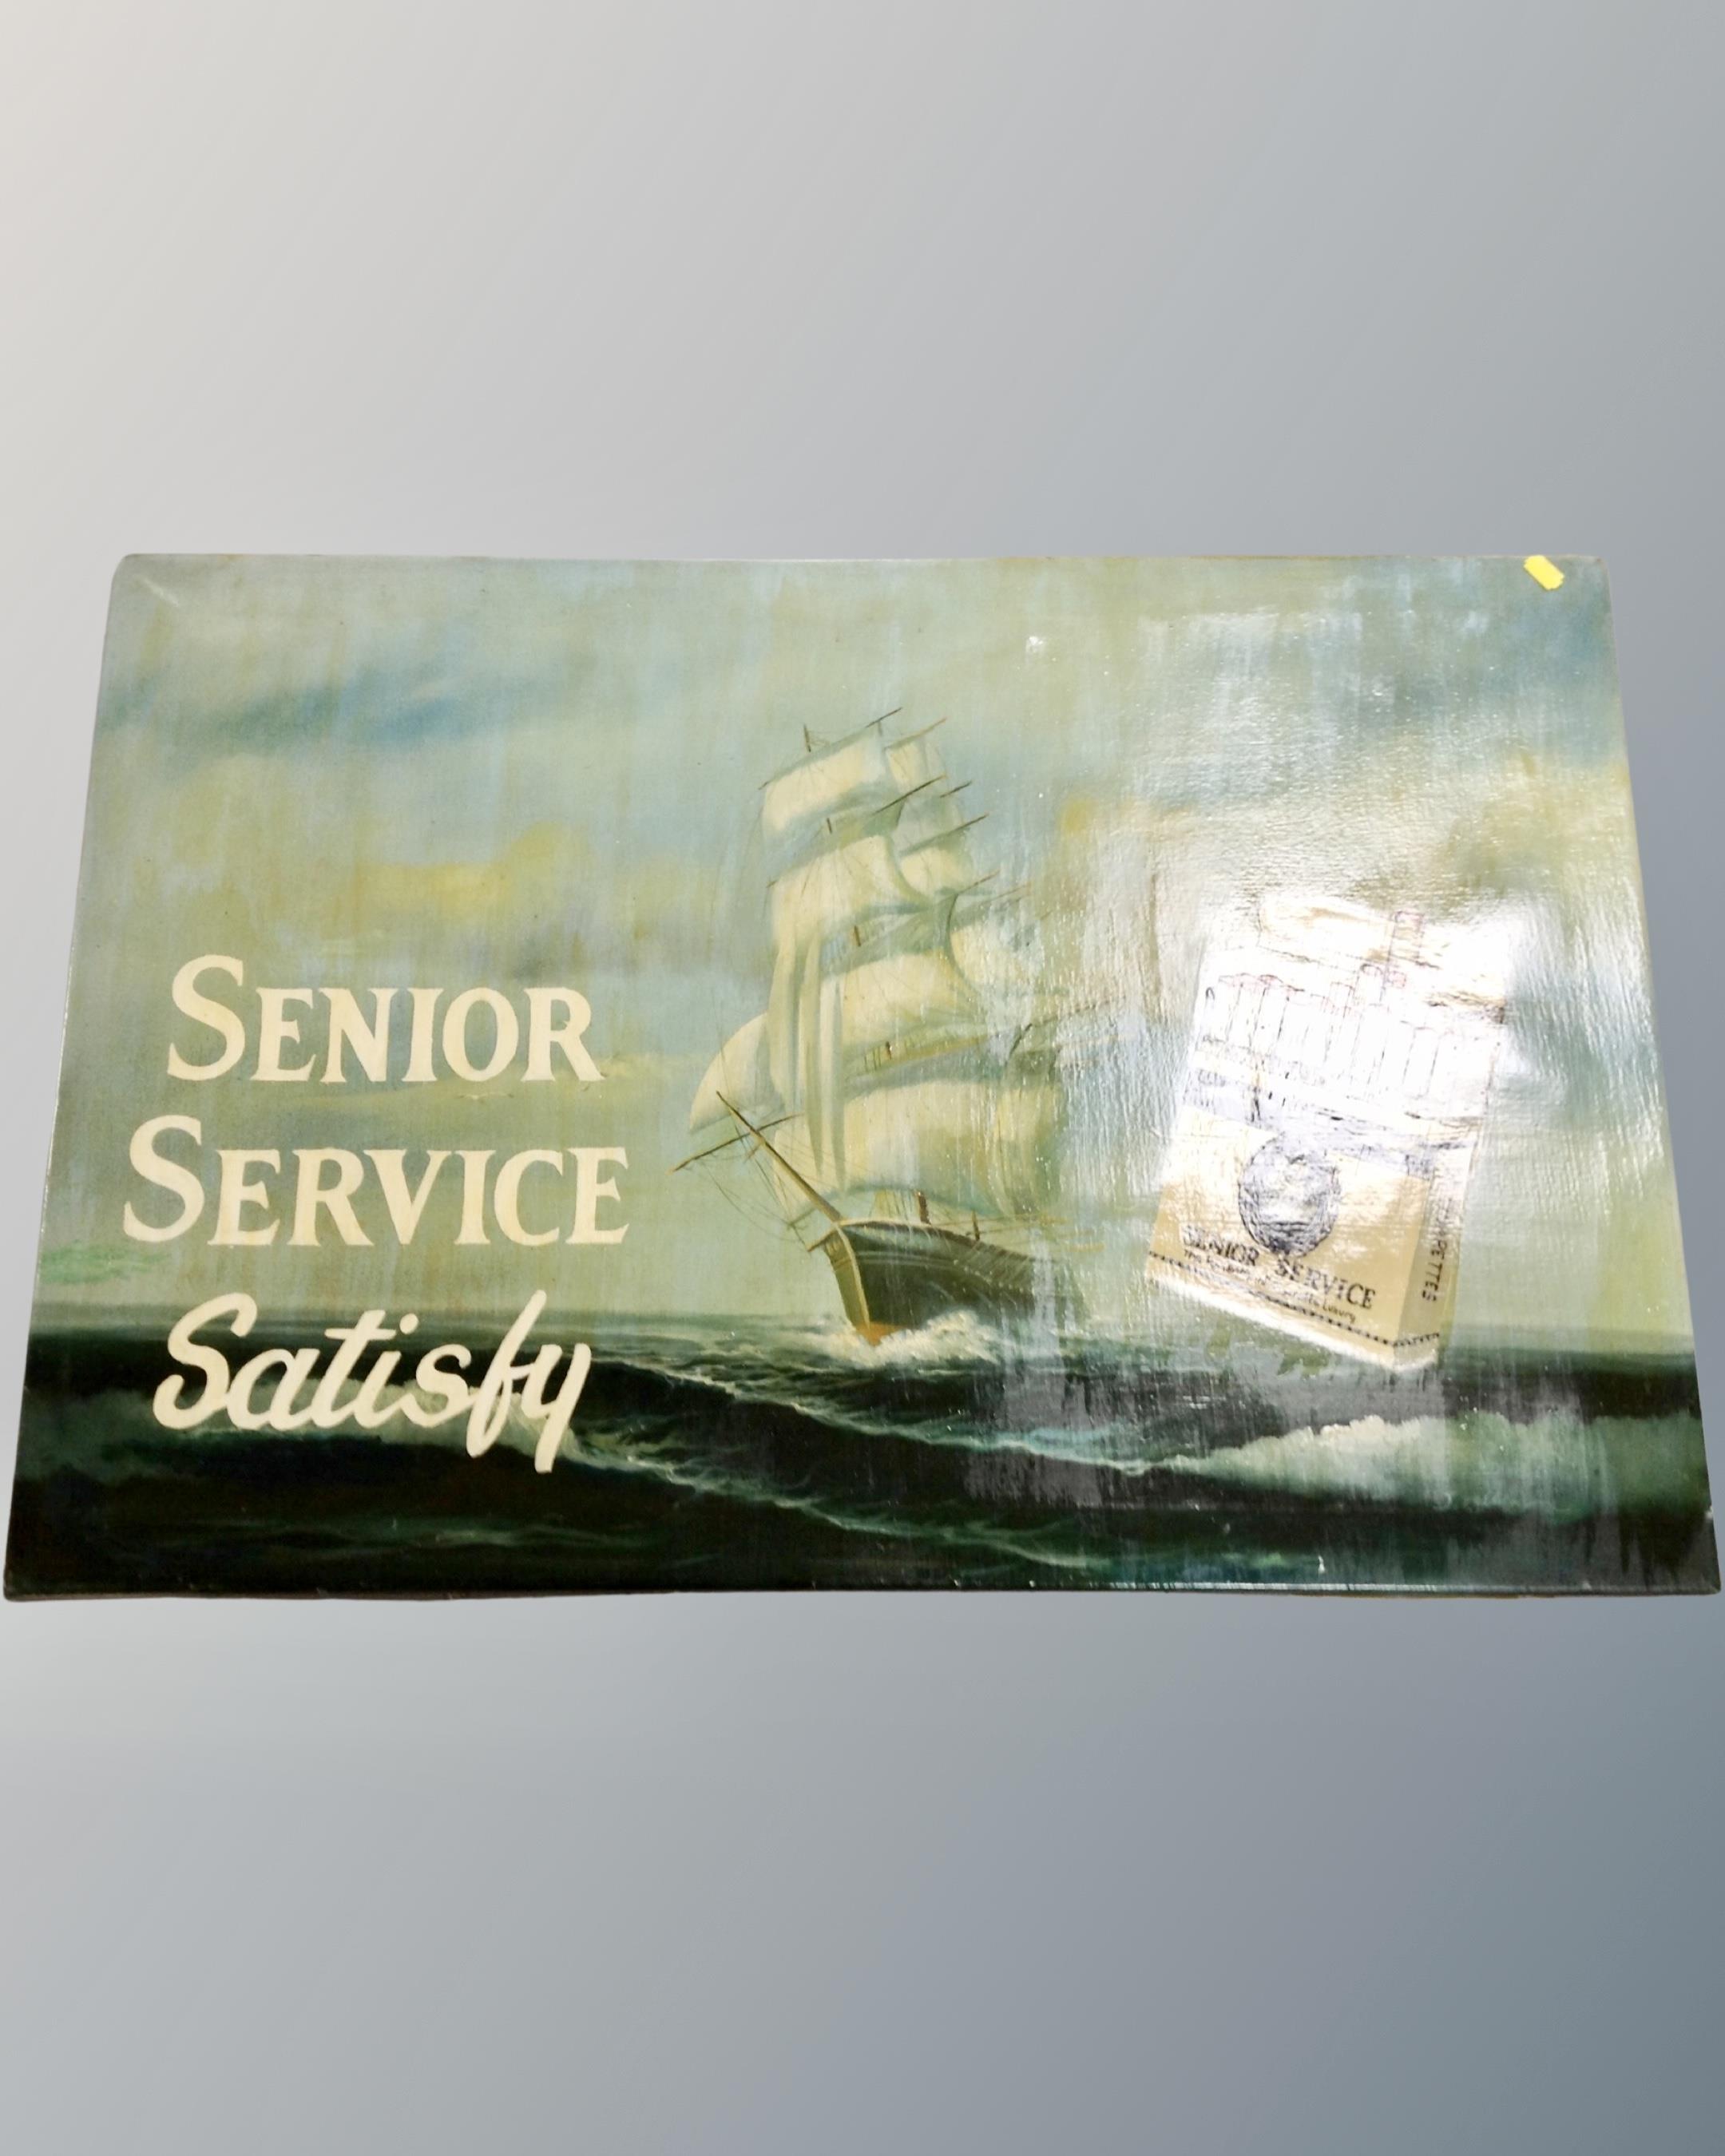 A painted Senior Service cigarette advertisement on canvas, 91cm by 61cm.